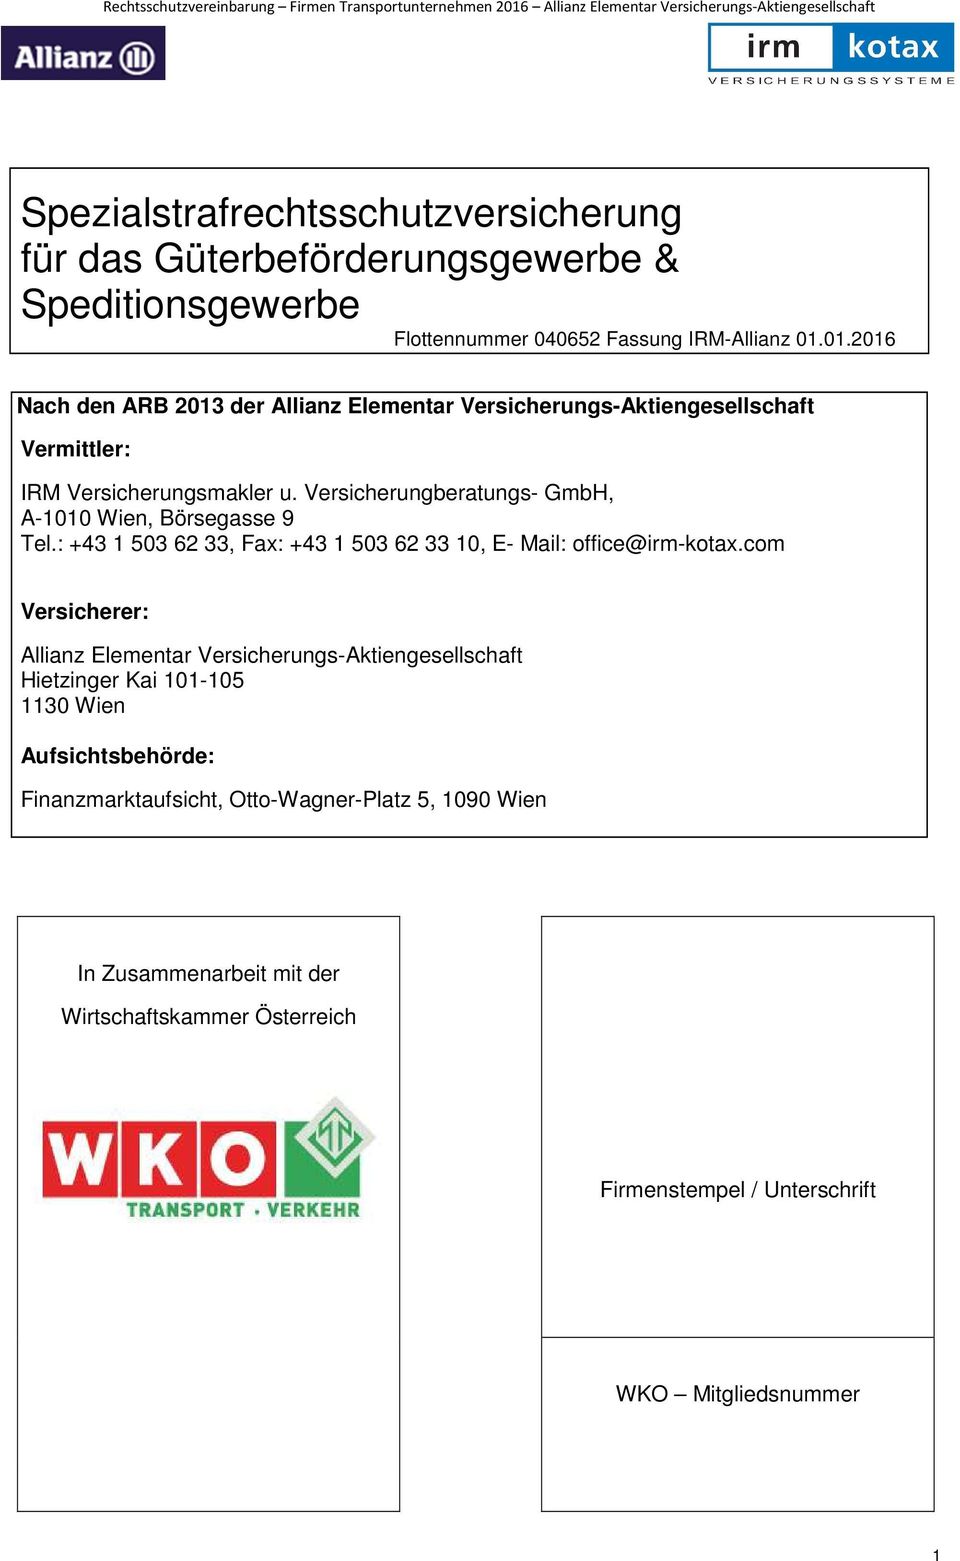 Versicherungberatungs- GmbH, A-1010 Wien, Börsegasse 9 Tel.: +43 1 503 62 33, Fax: +43 1 503 62 33 10, E- Mail: office@irm-kotax.